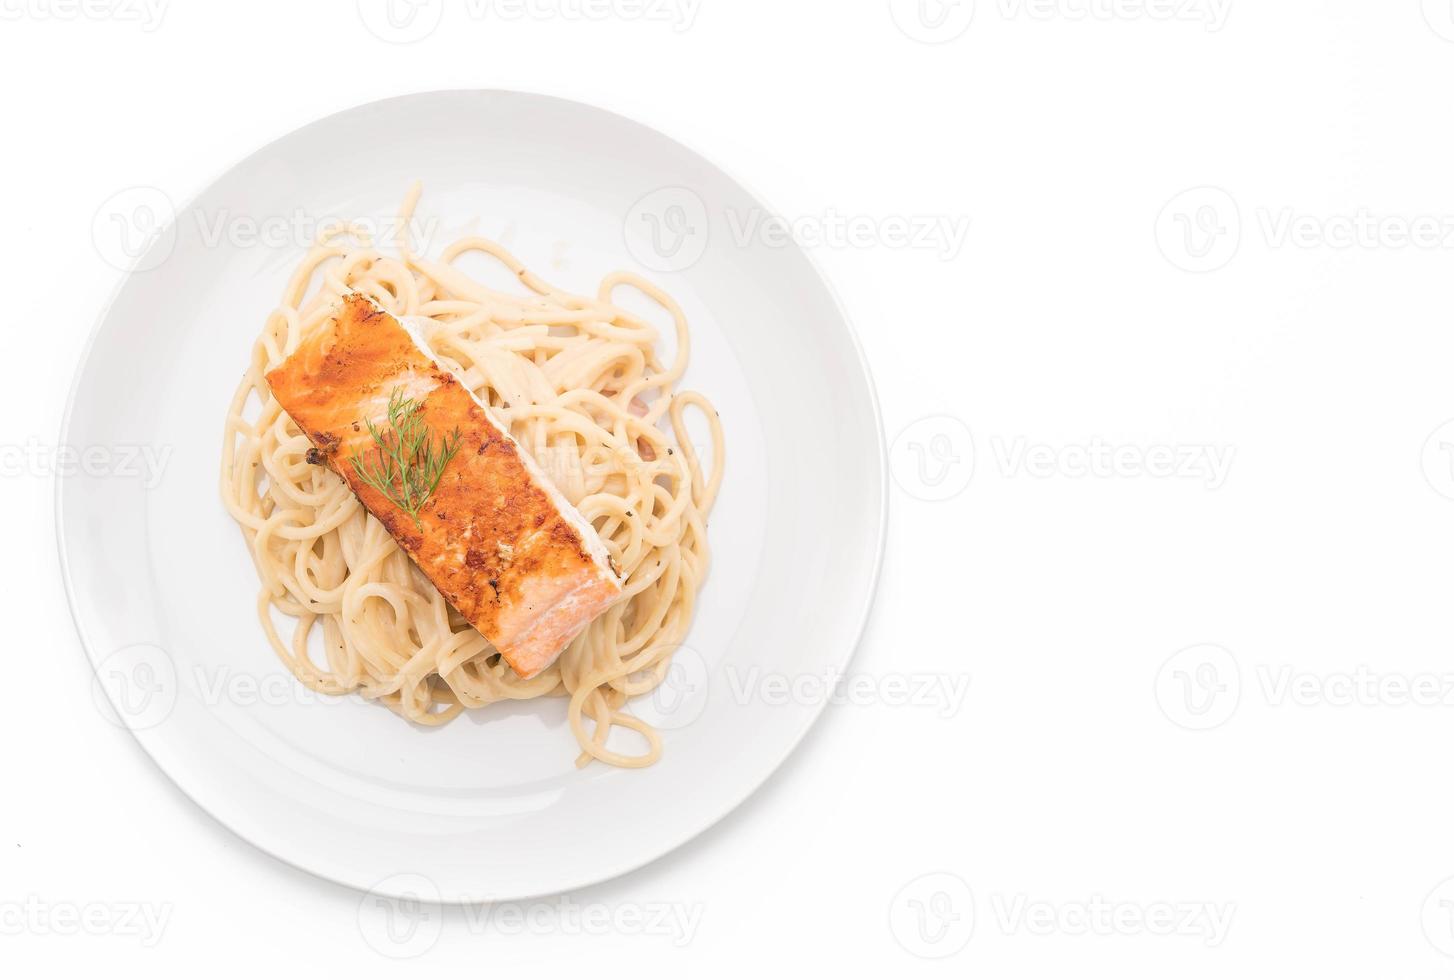 sauce crème spaghetti au saumon grillé photo